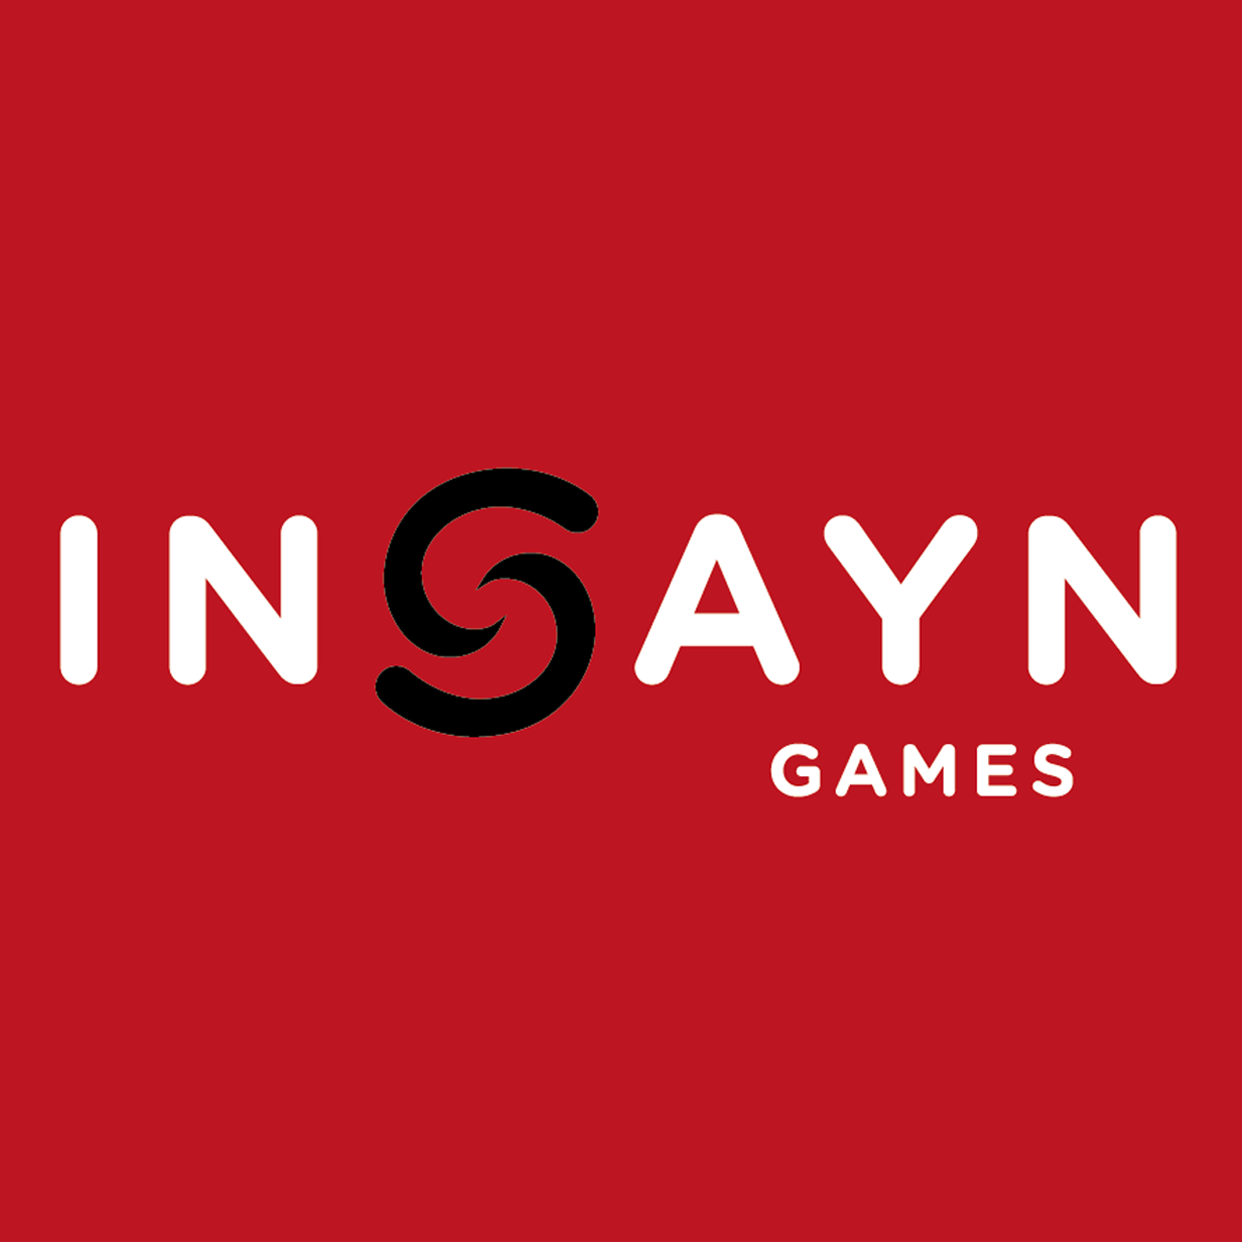 InSayn Logo Games Red